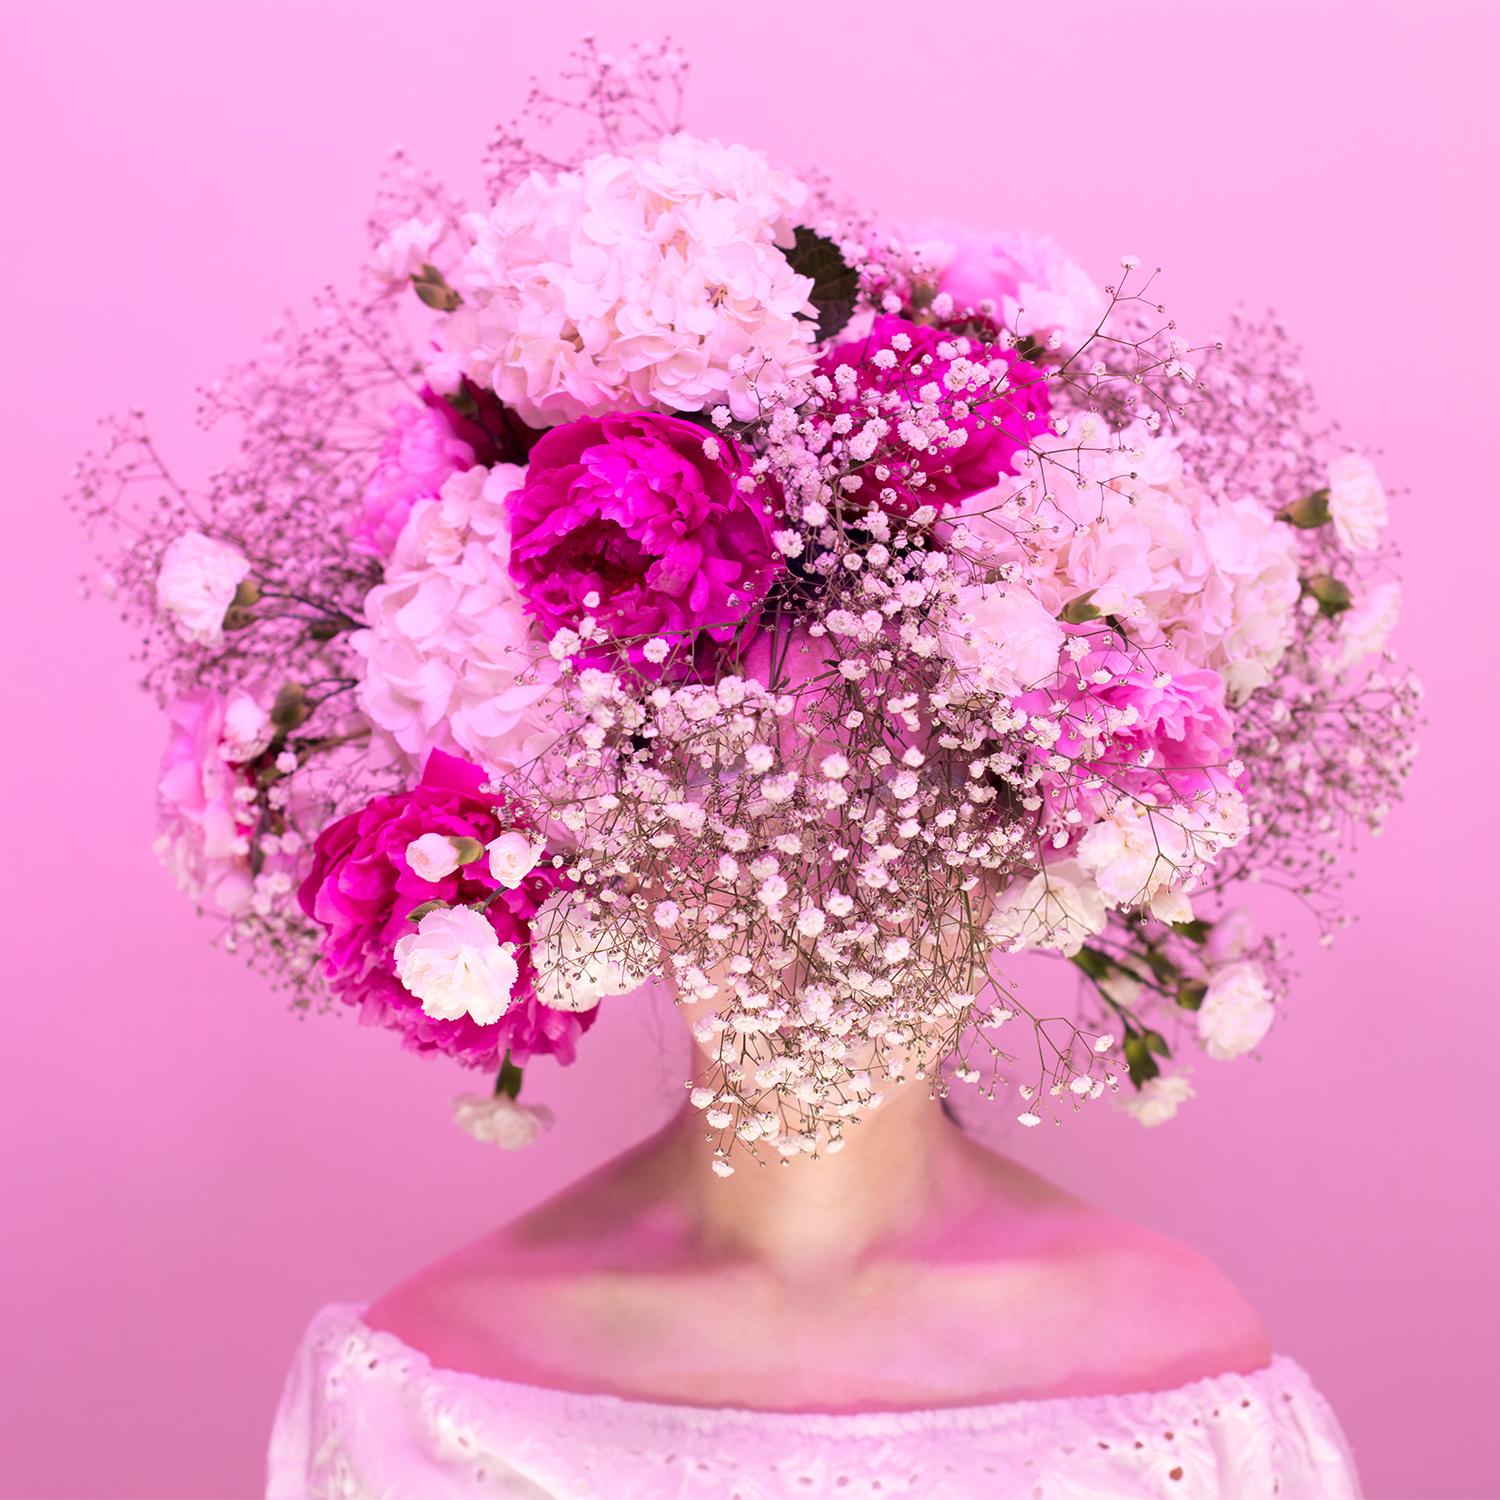 Ziesook You Portrait Photograph – Rosa Scent of Pink